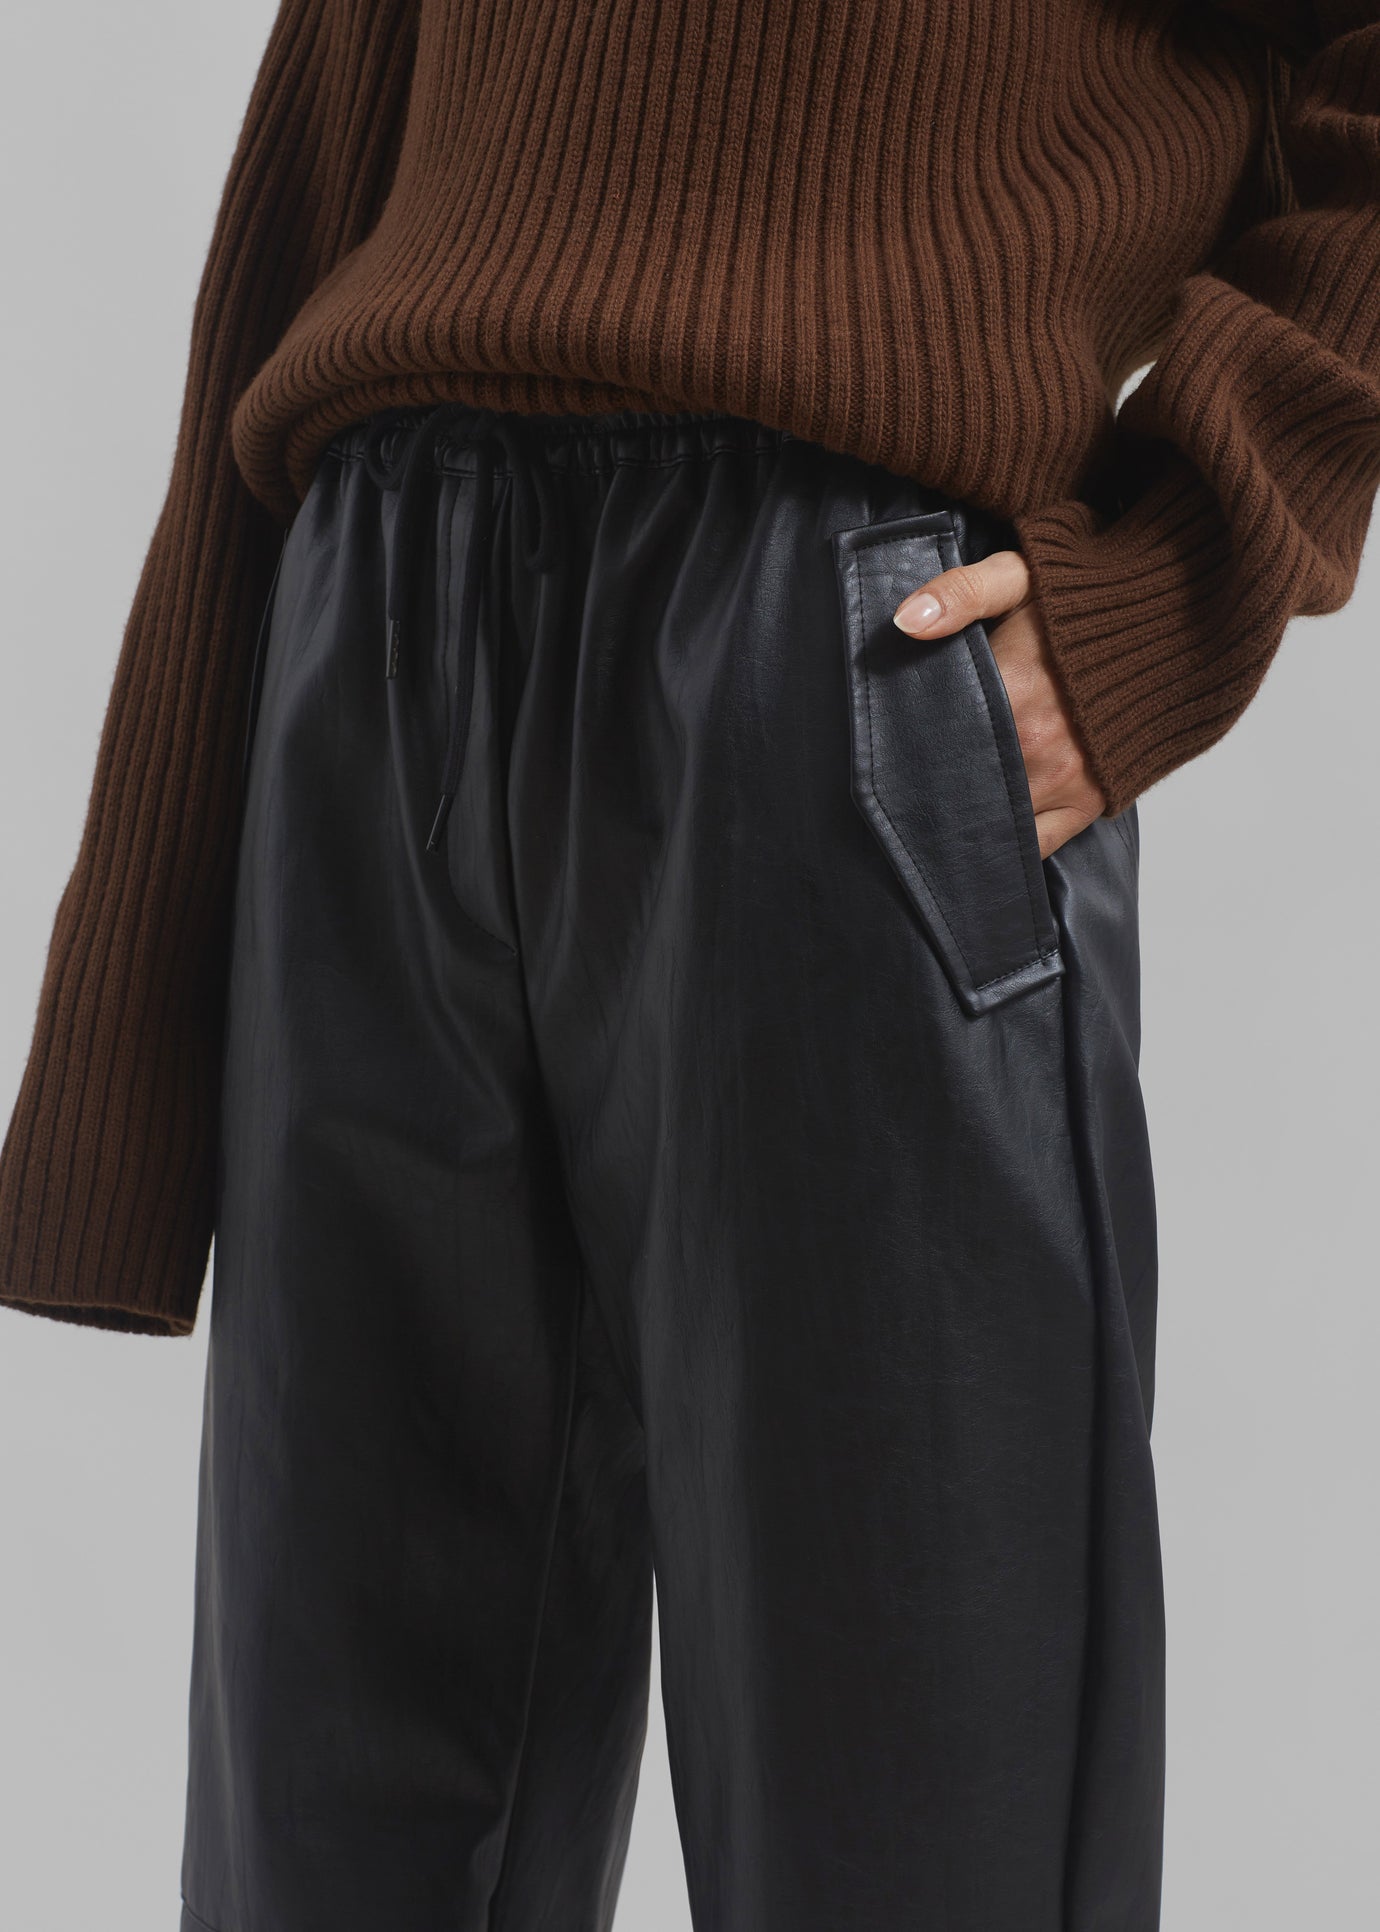 Grayson Faux Leather Pants - Black - 1